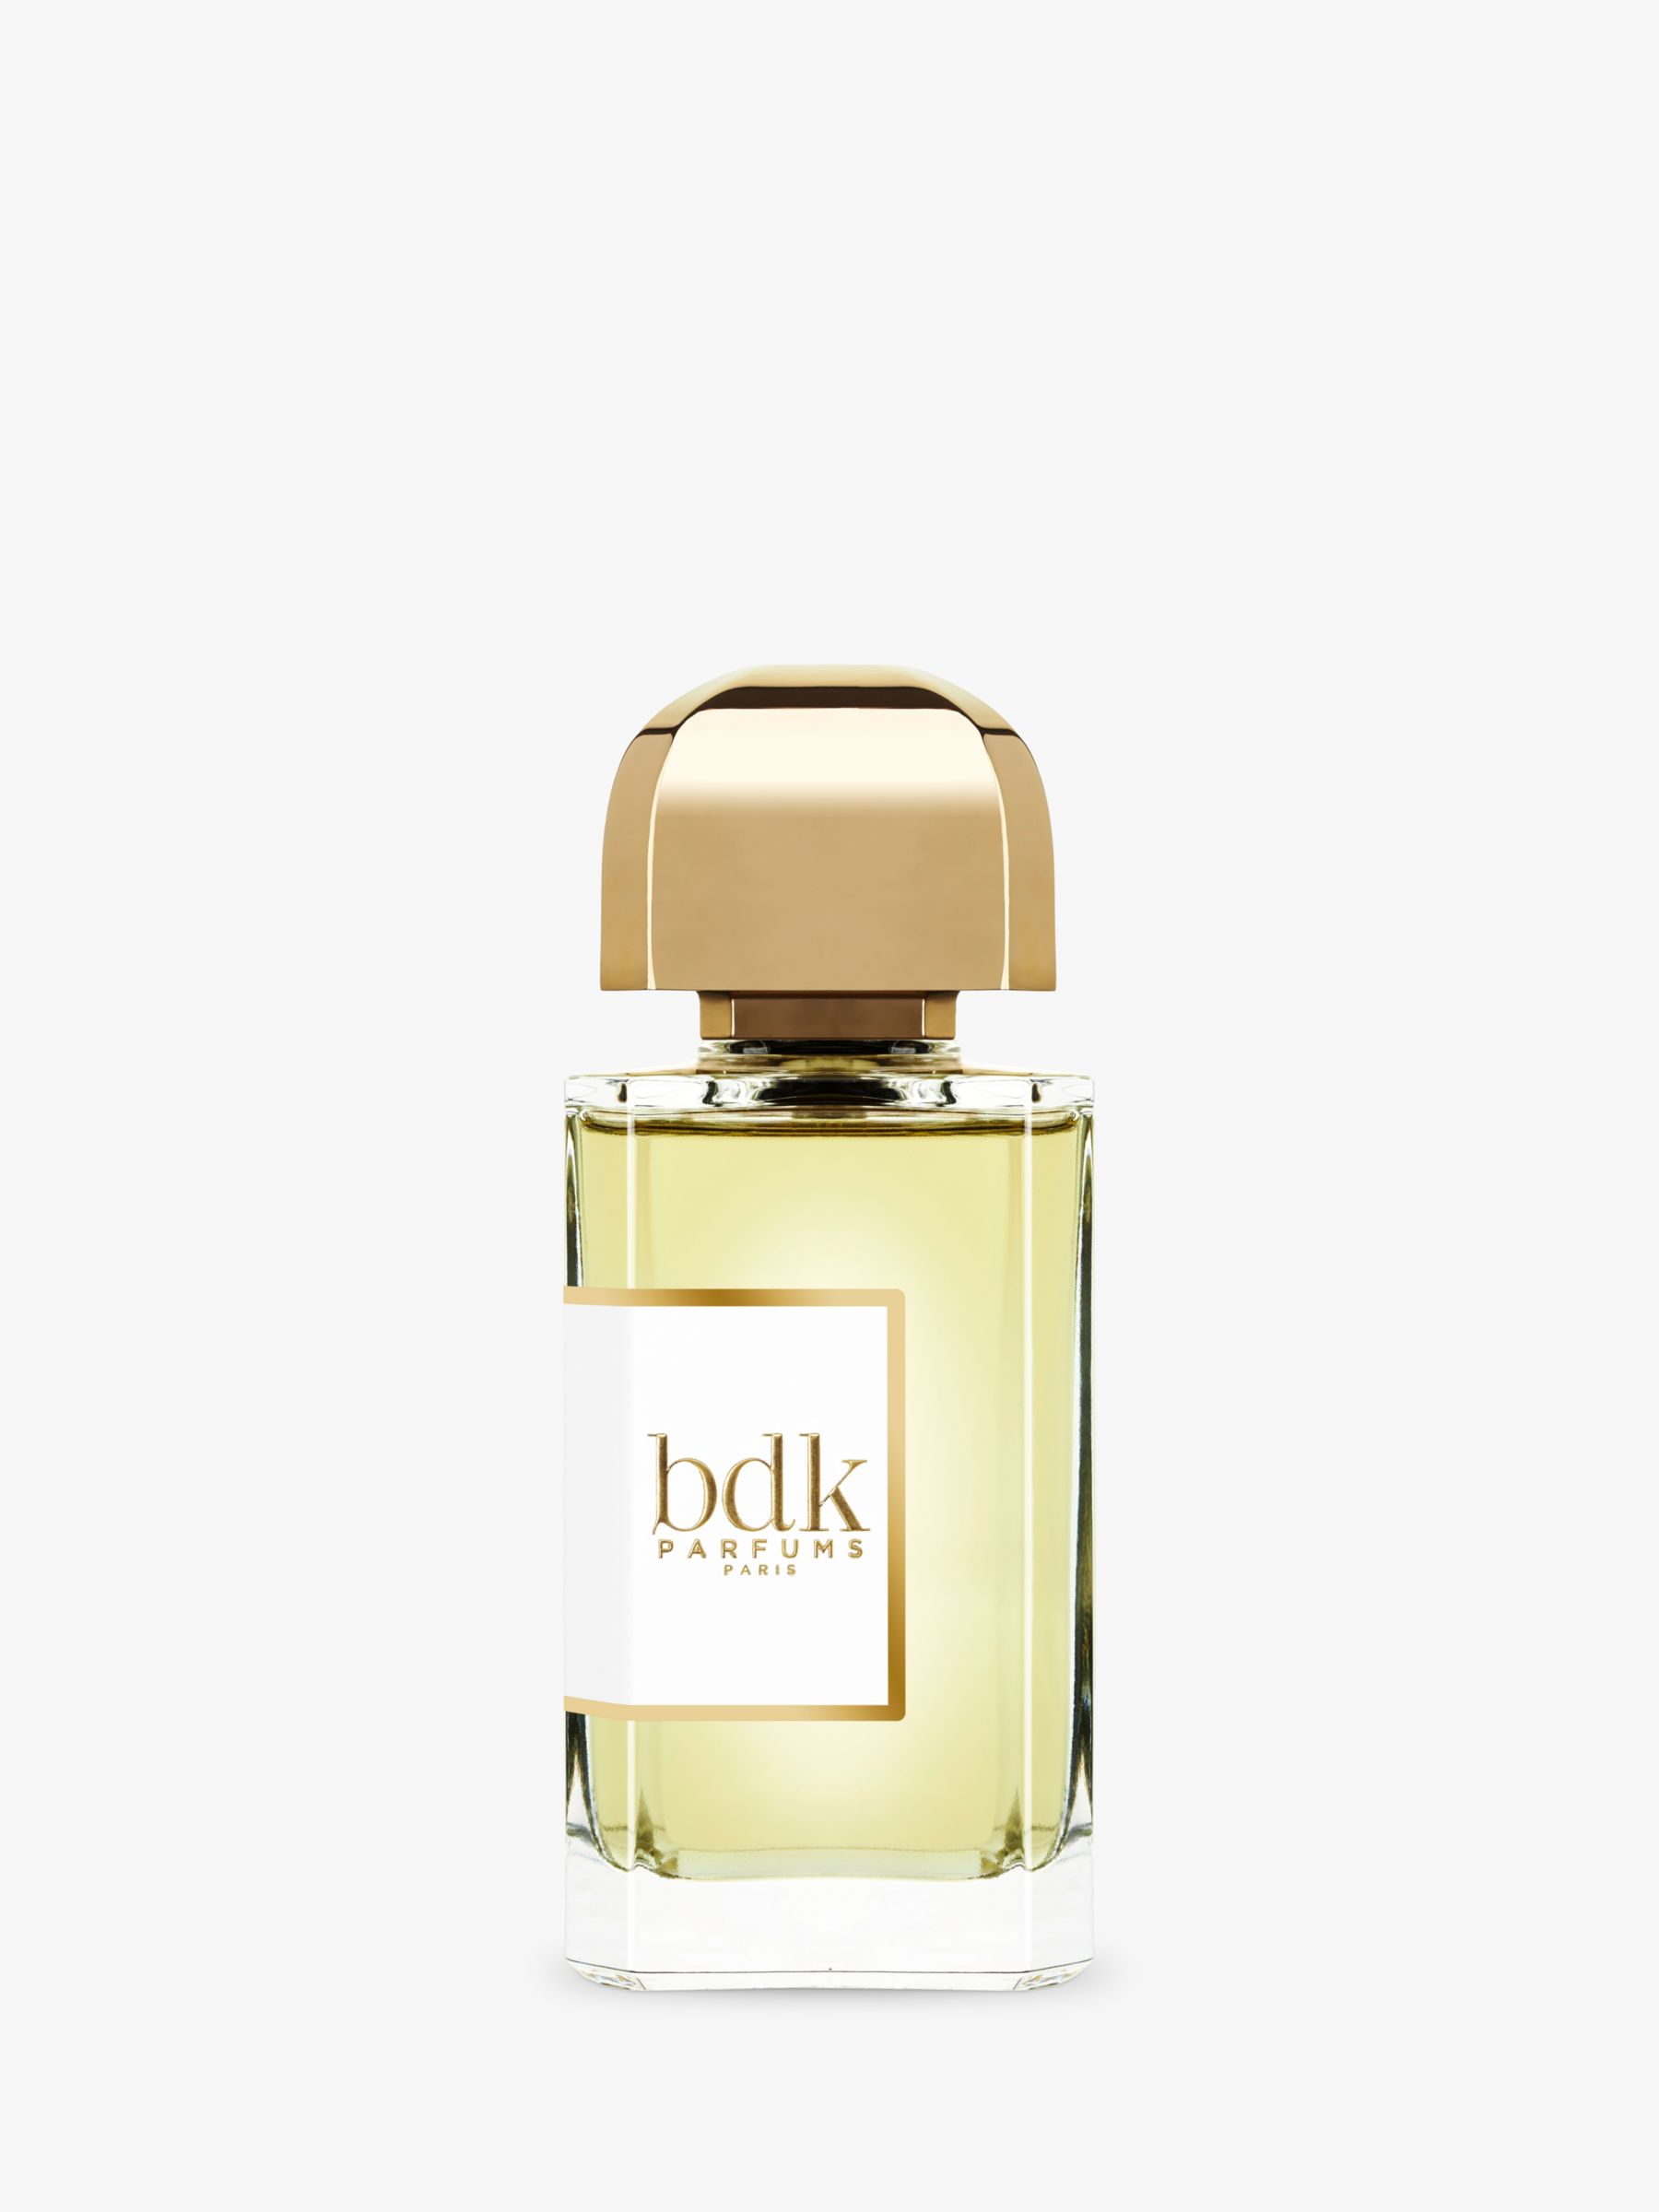 BDK Parfums Velvet Tonka Eau de Parfum, 100ml